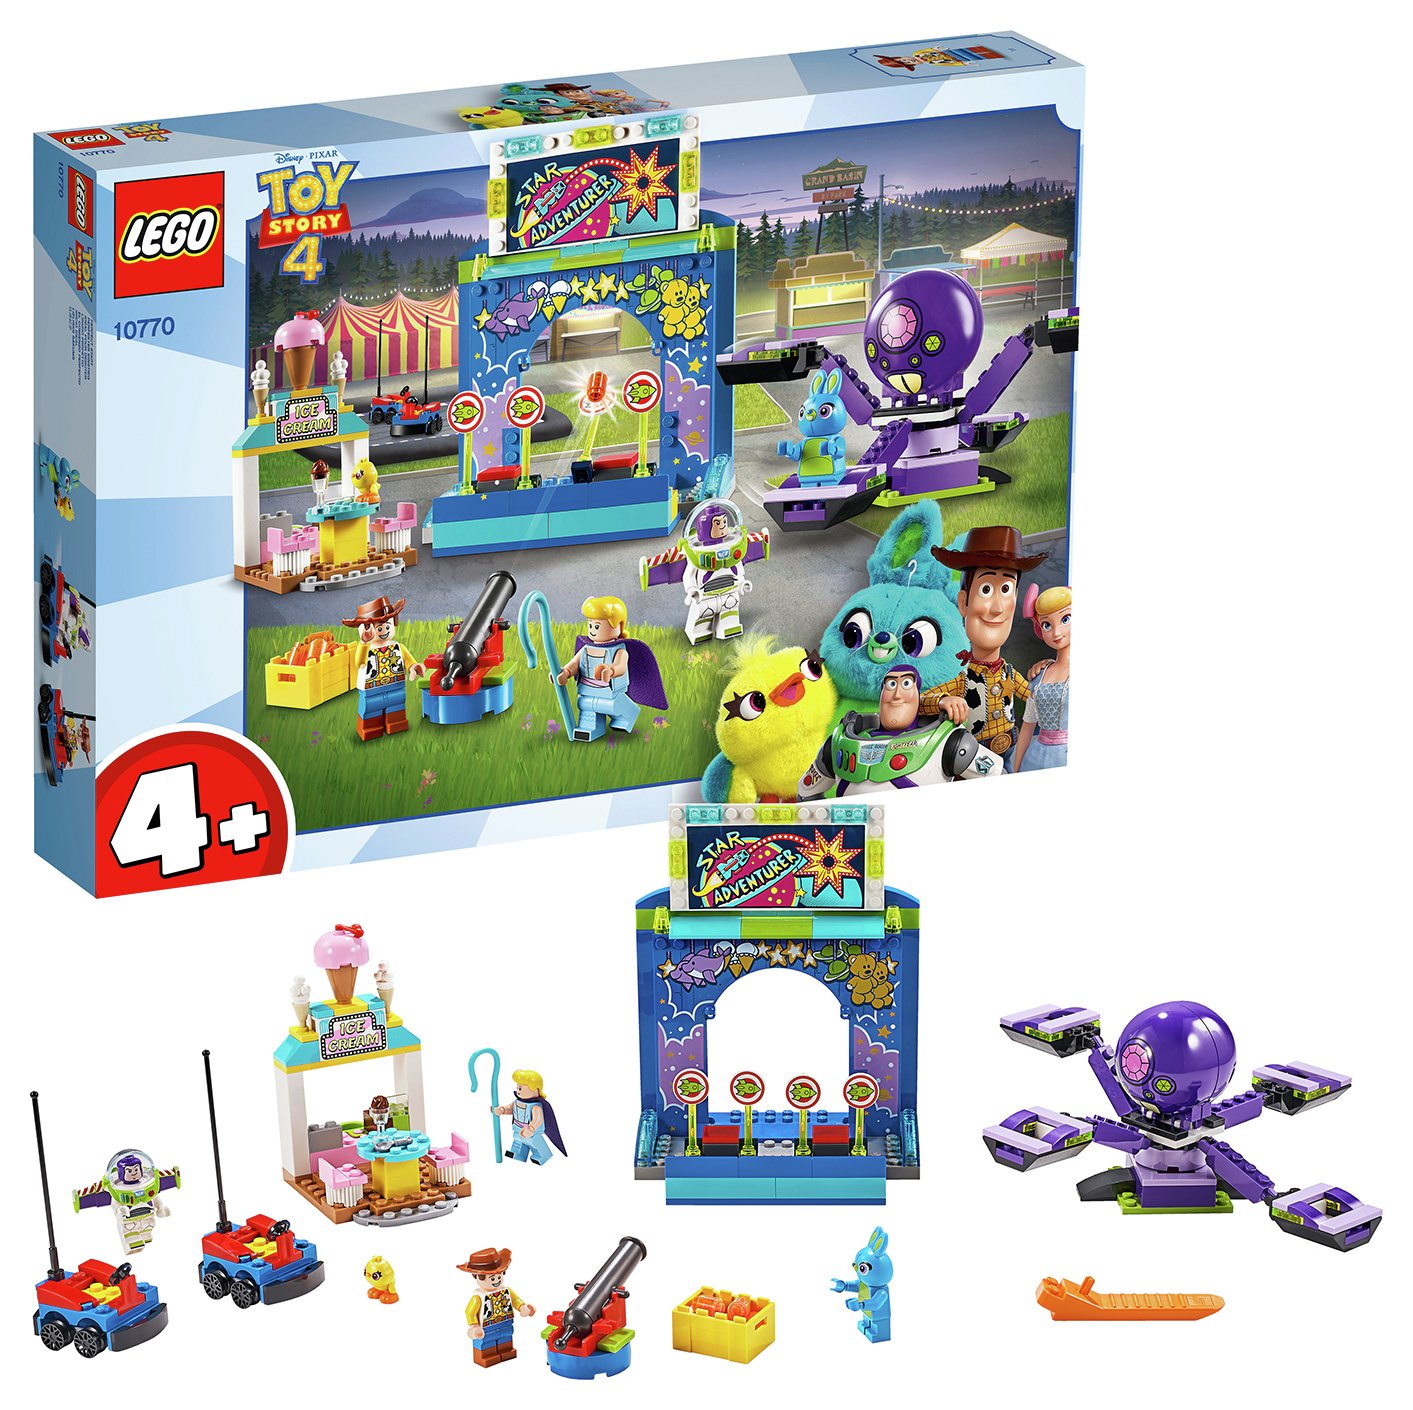 LEGO Toy Story 4 Funfair Playset - 10770